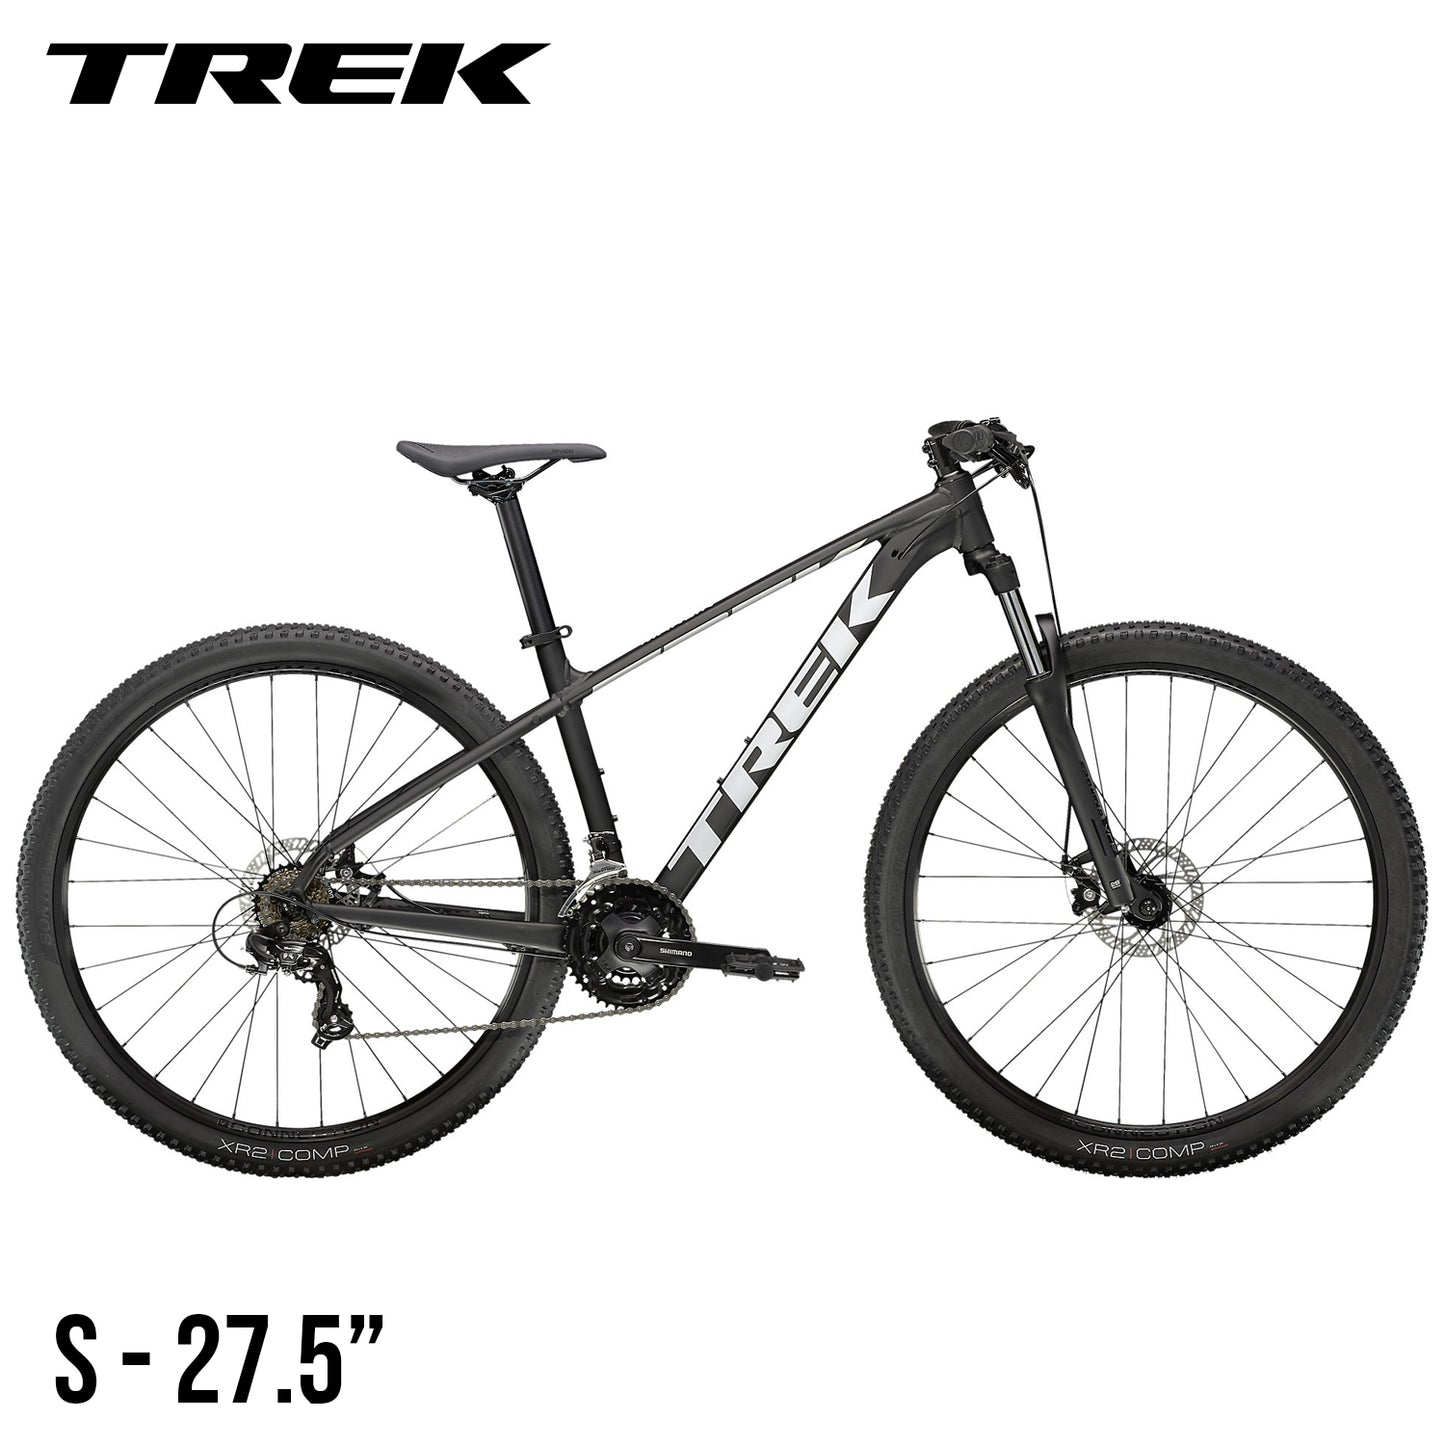 TREK Marlin 4 Gen 2 Cross Country Mountain Bike 27.5" - Matte Trek Black